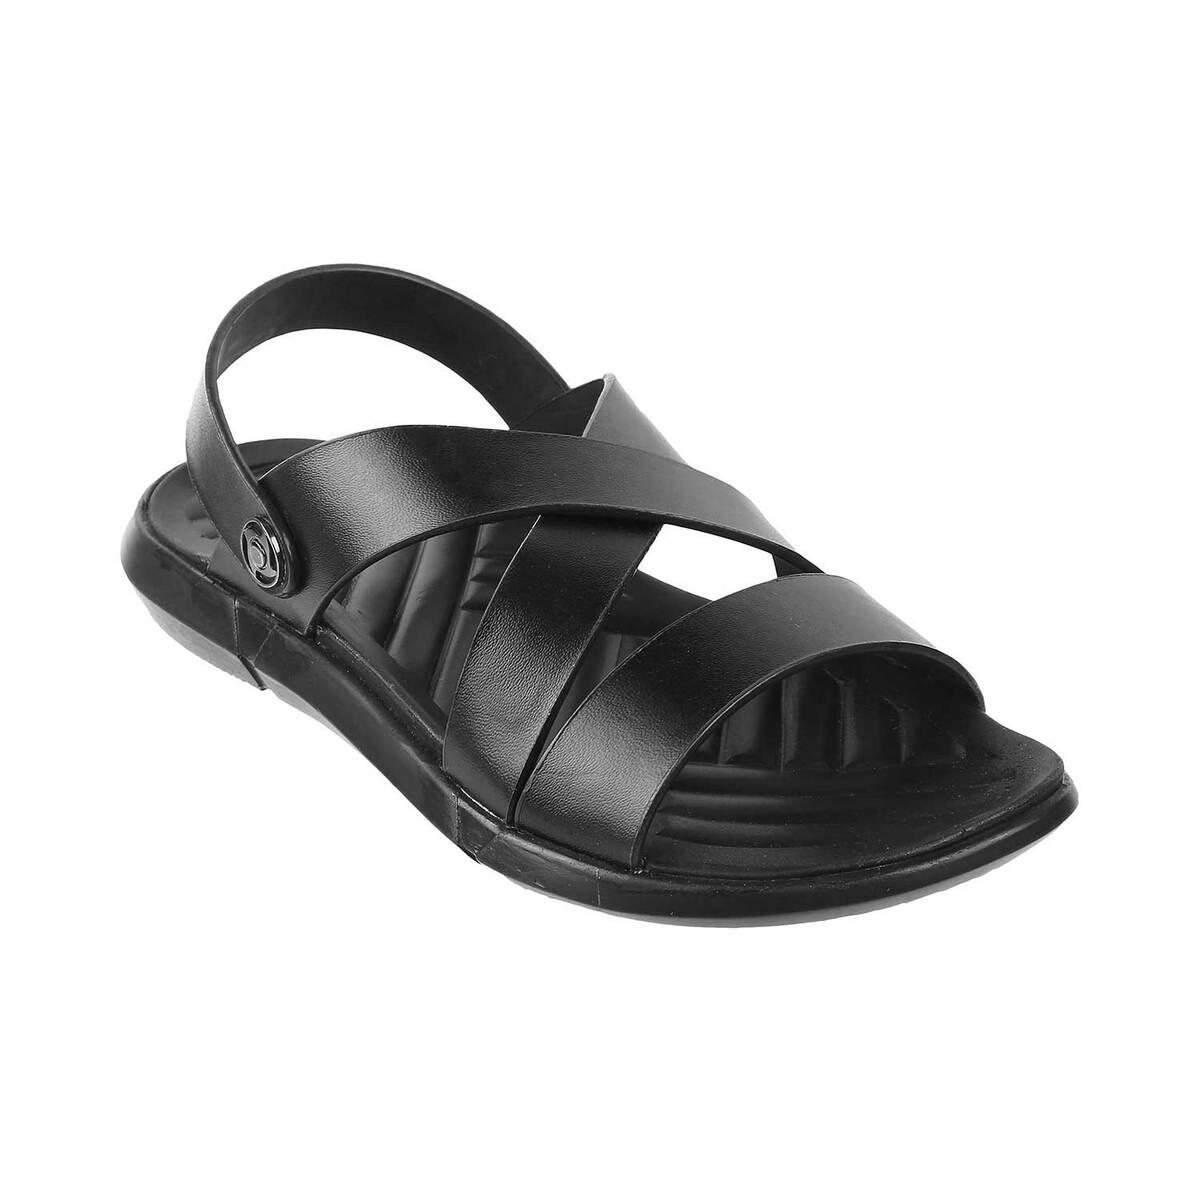 GH Bass & Co. Women's Black Strappy Flat Comfort Casual Sandals Size 8.5M |  Strappy flats, Casual sandals, G.h. bass & co.